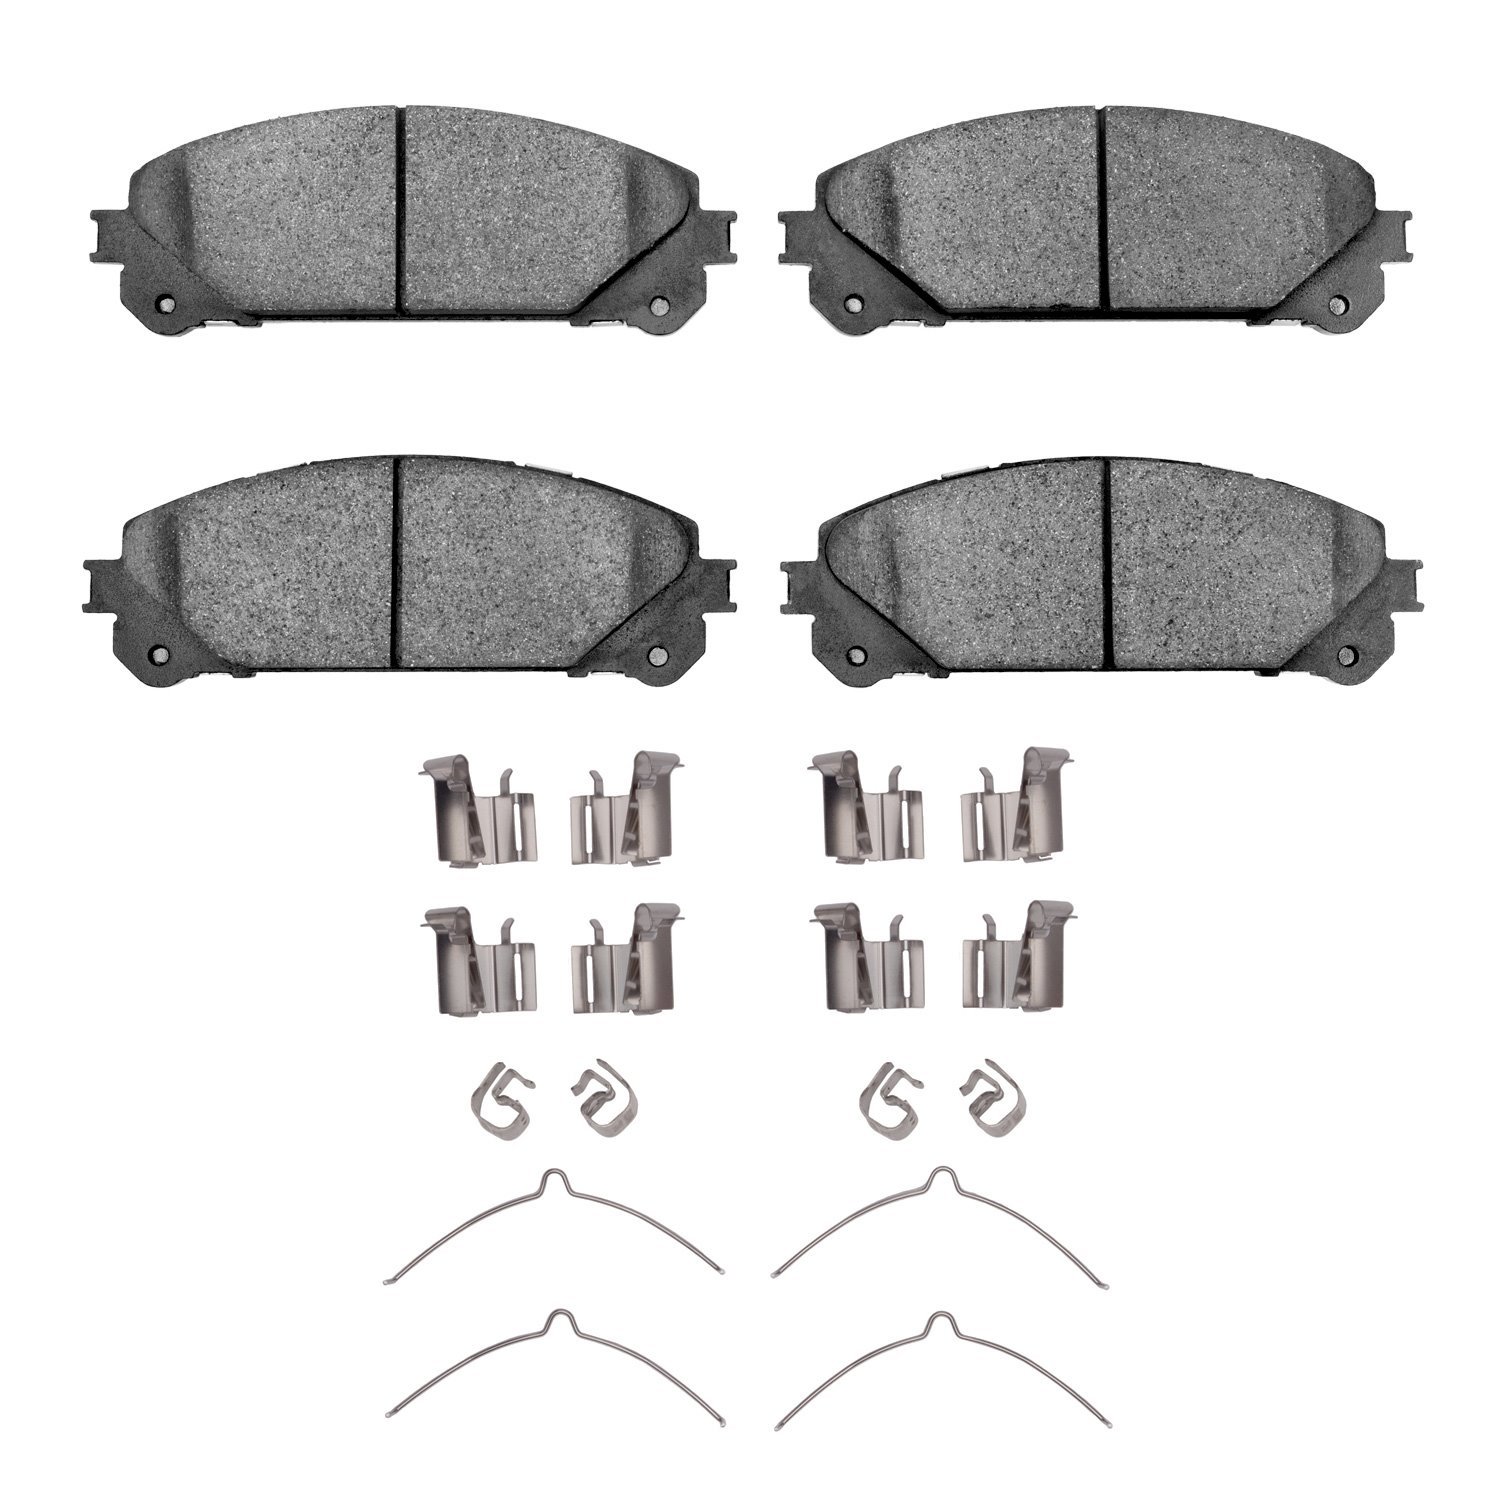 1310-1324-01 3000-Series Ceramic Brake Pads & Hardware Kit, Fits Select Multiple Makes/Models, Position: Front